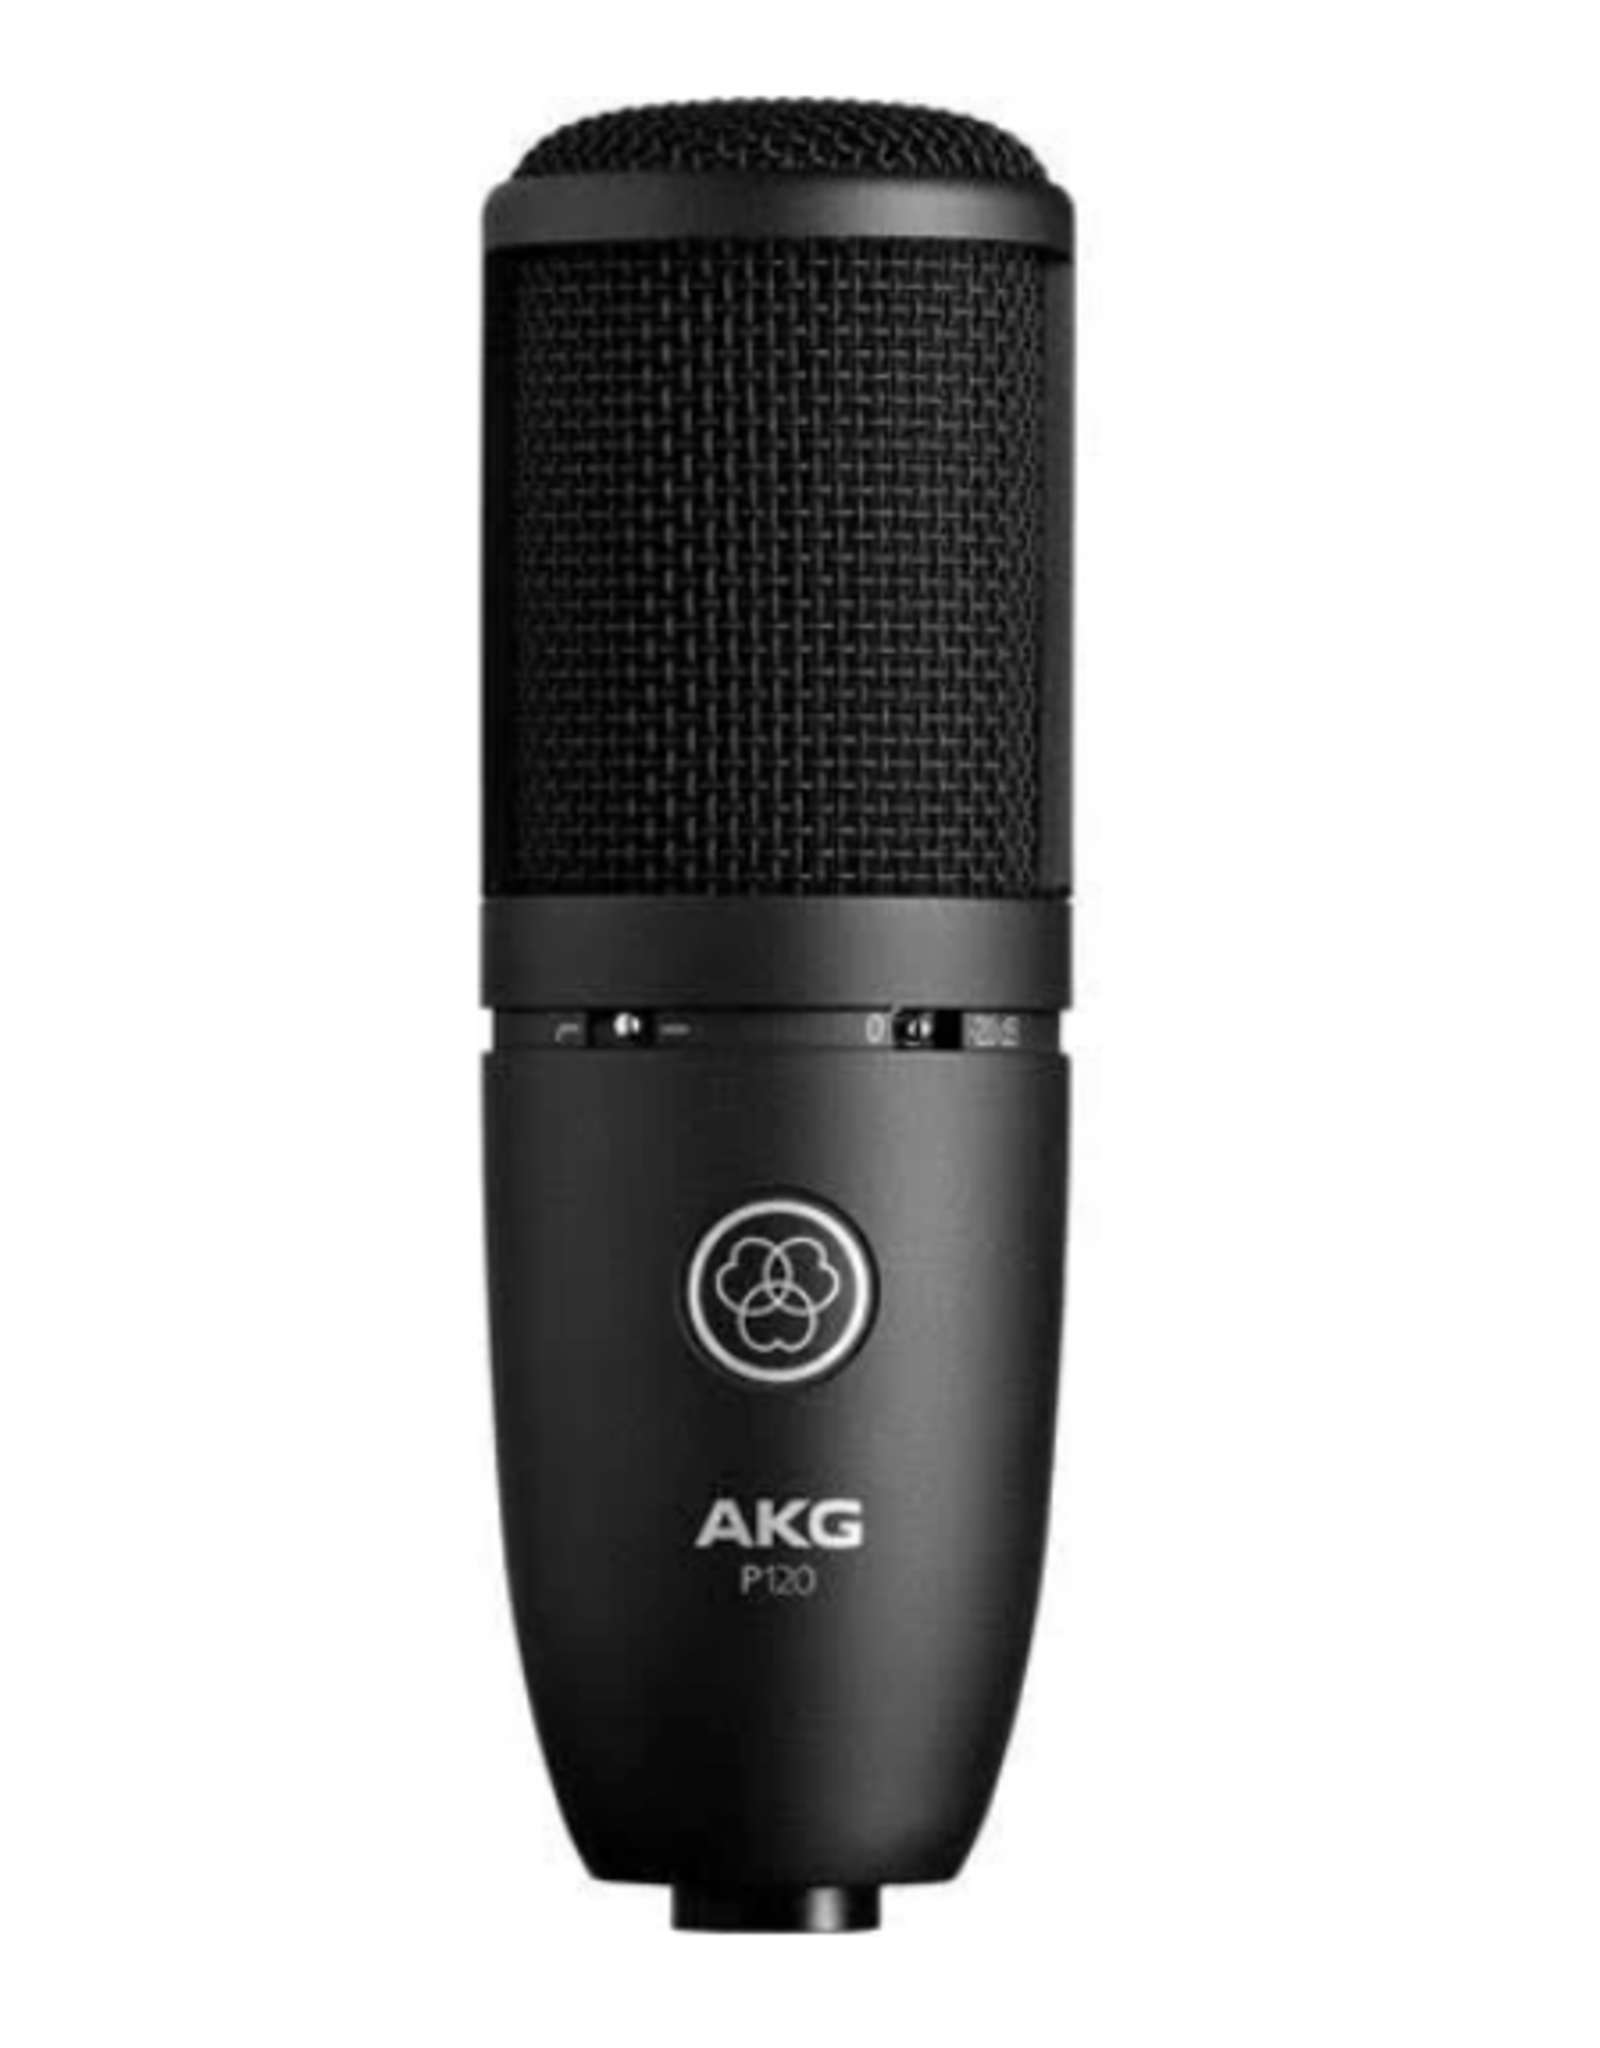 AKG AKG P120 High Performance General Purpose Recording Mic